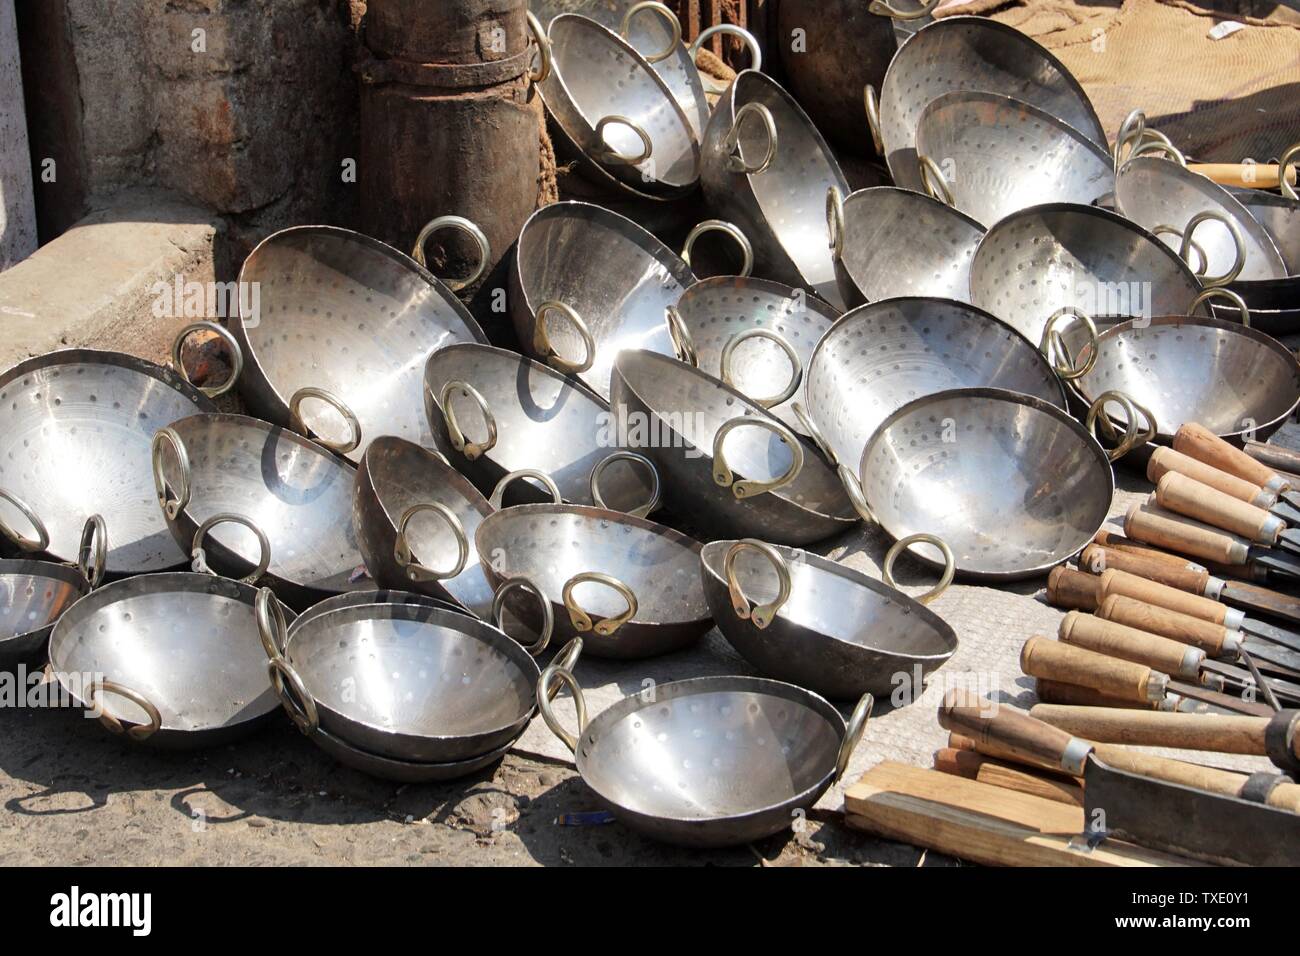 Close Up Of A Pile Of Indian Kadai Cooking Pans TXE0Y1 